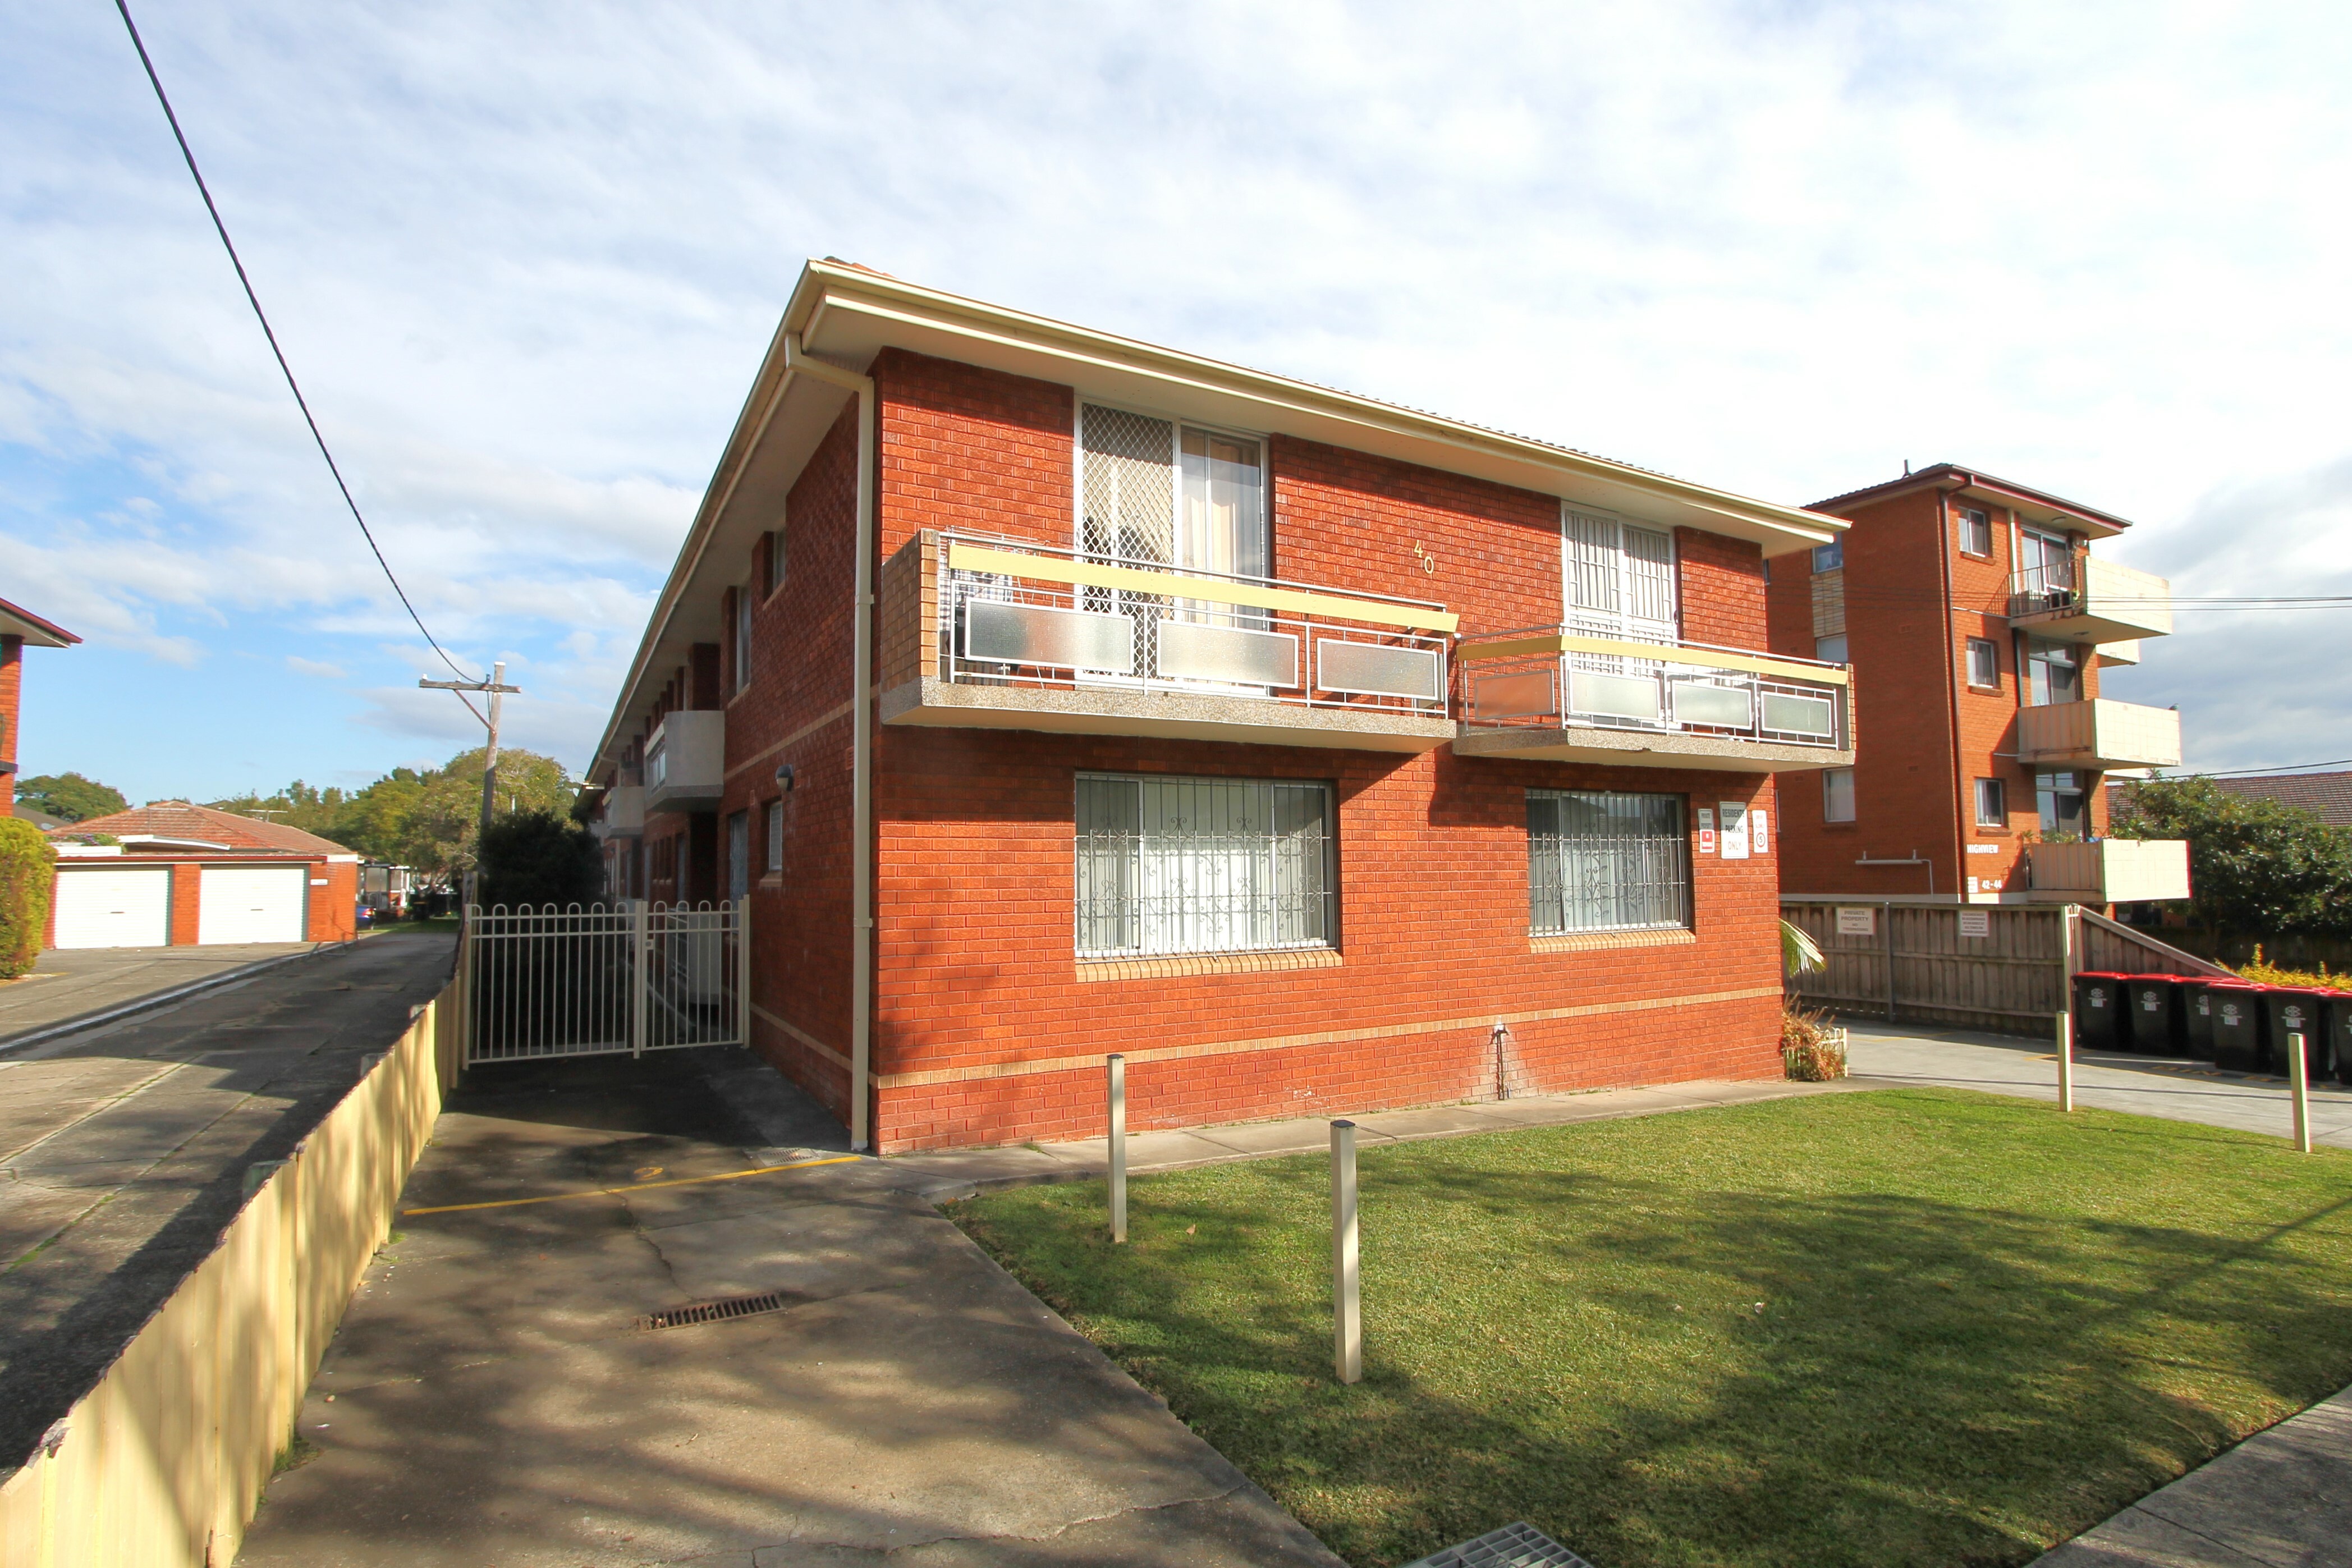 Unit 15/40 Fairmount St, Lakemba, NSW 2195, 2 habitaciones, 1 baños, Unit